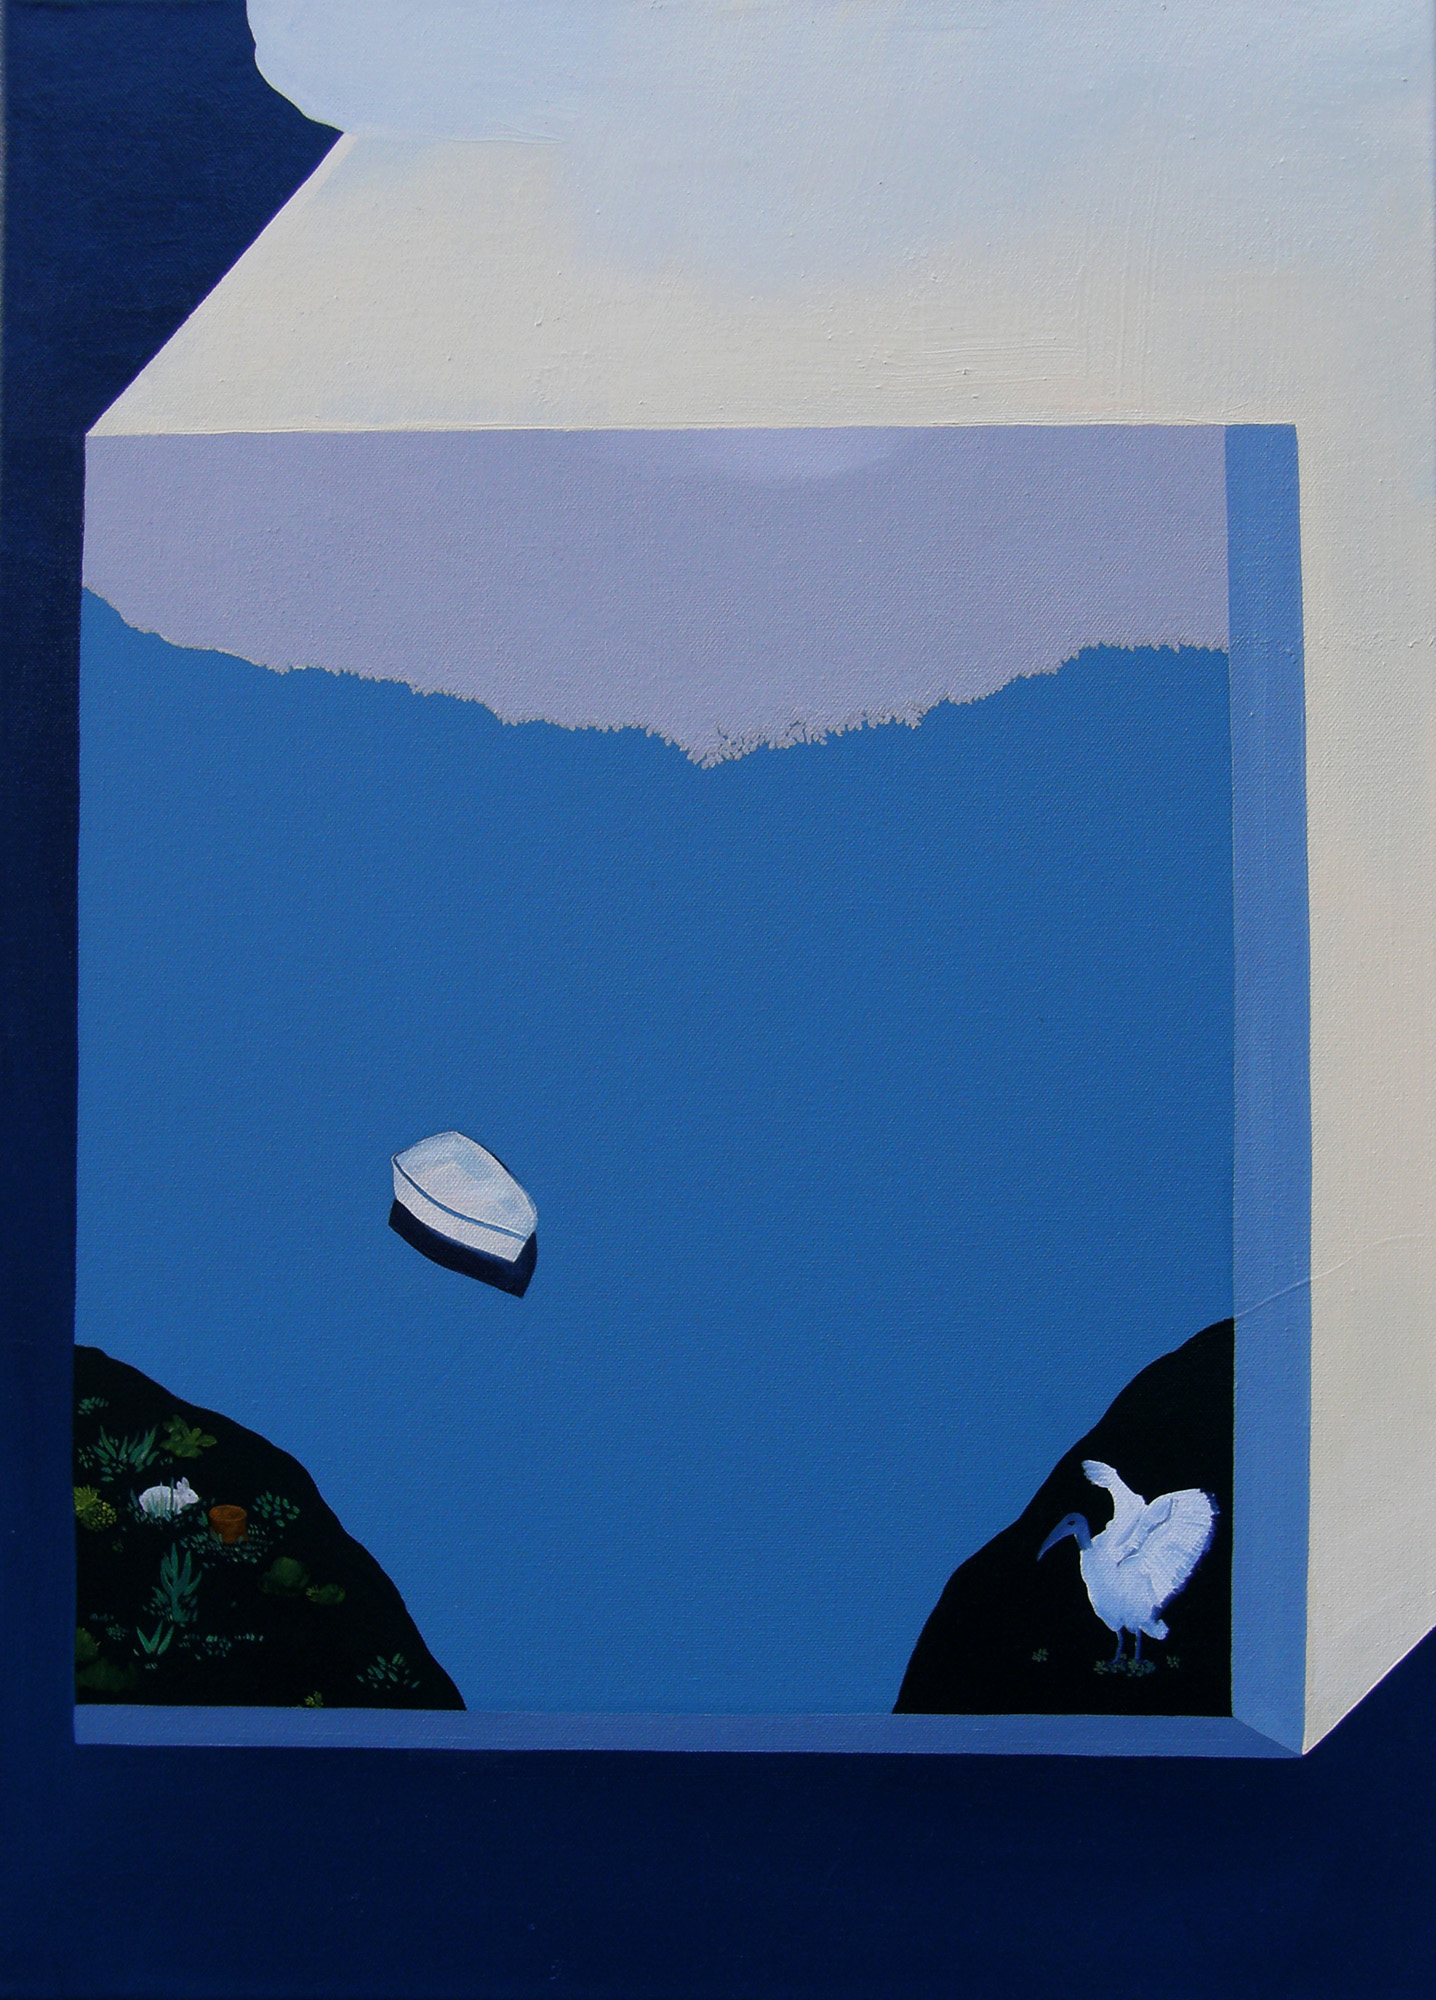 Ibis, 2014, mixed media on canvas, 70 x 50 cm.